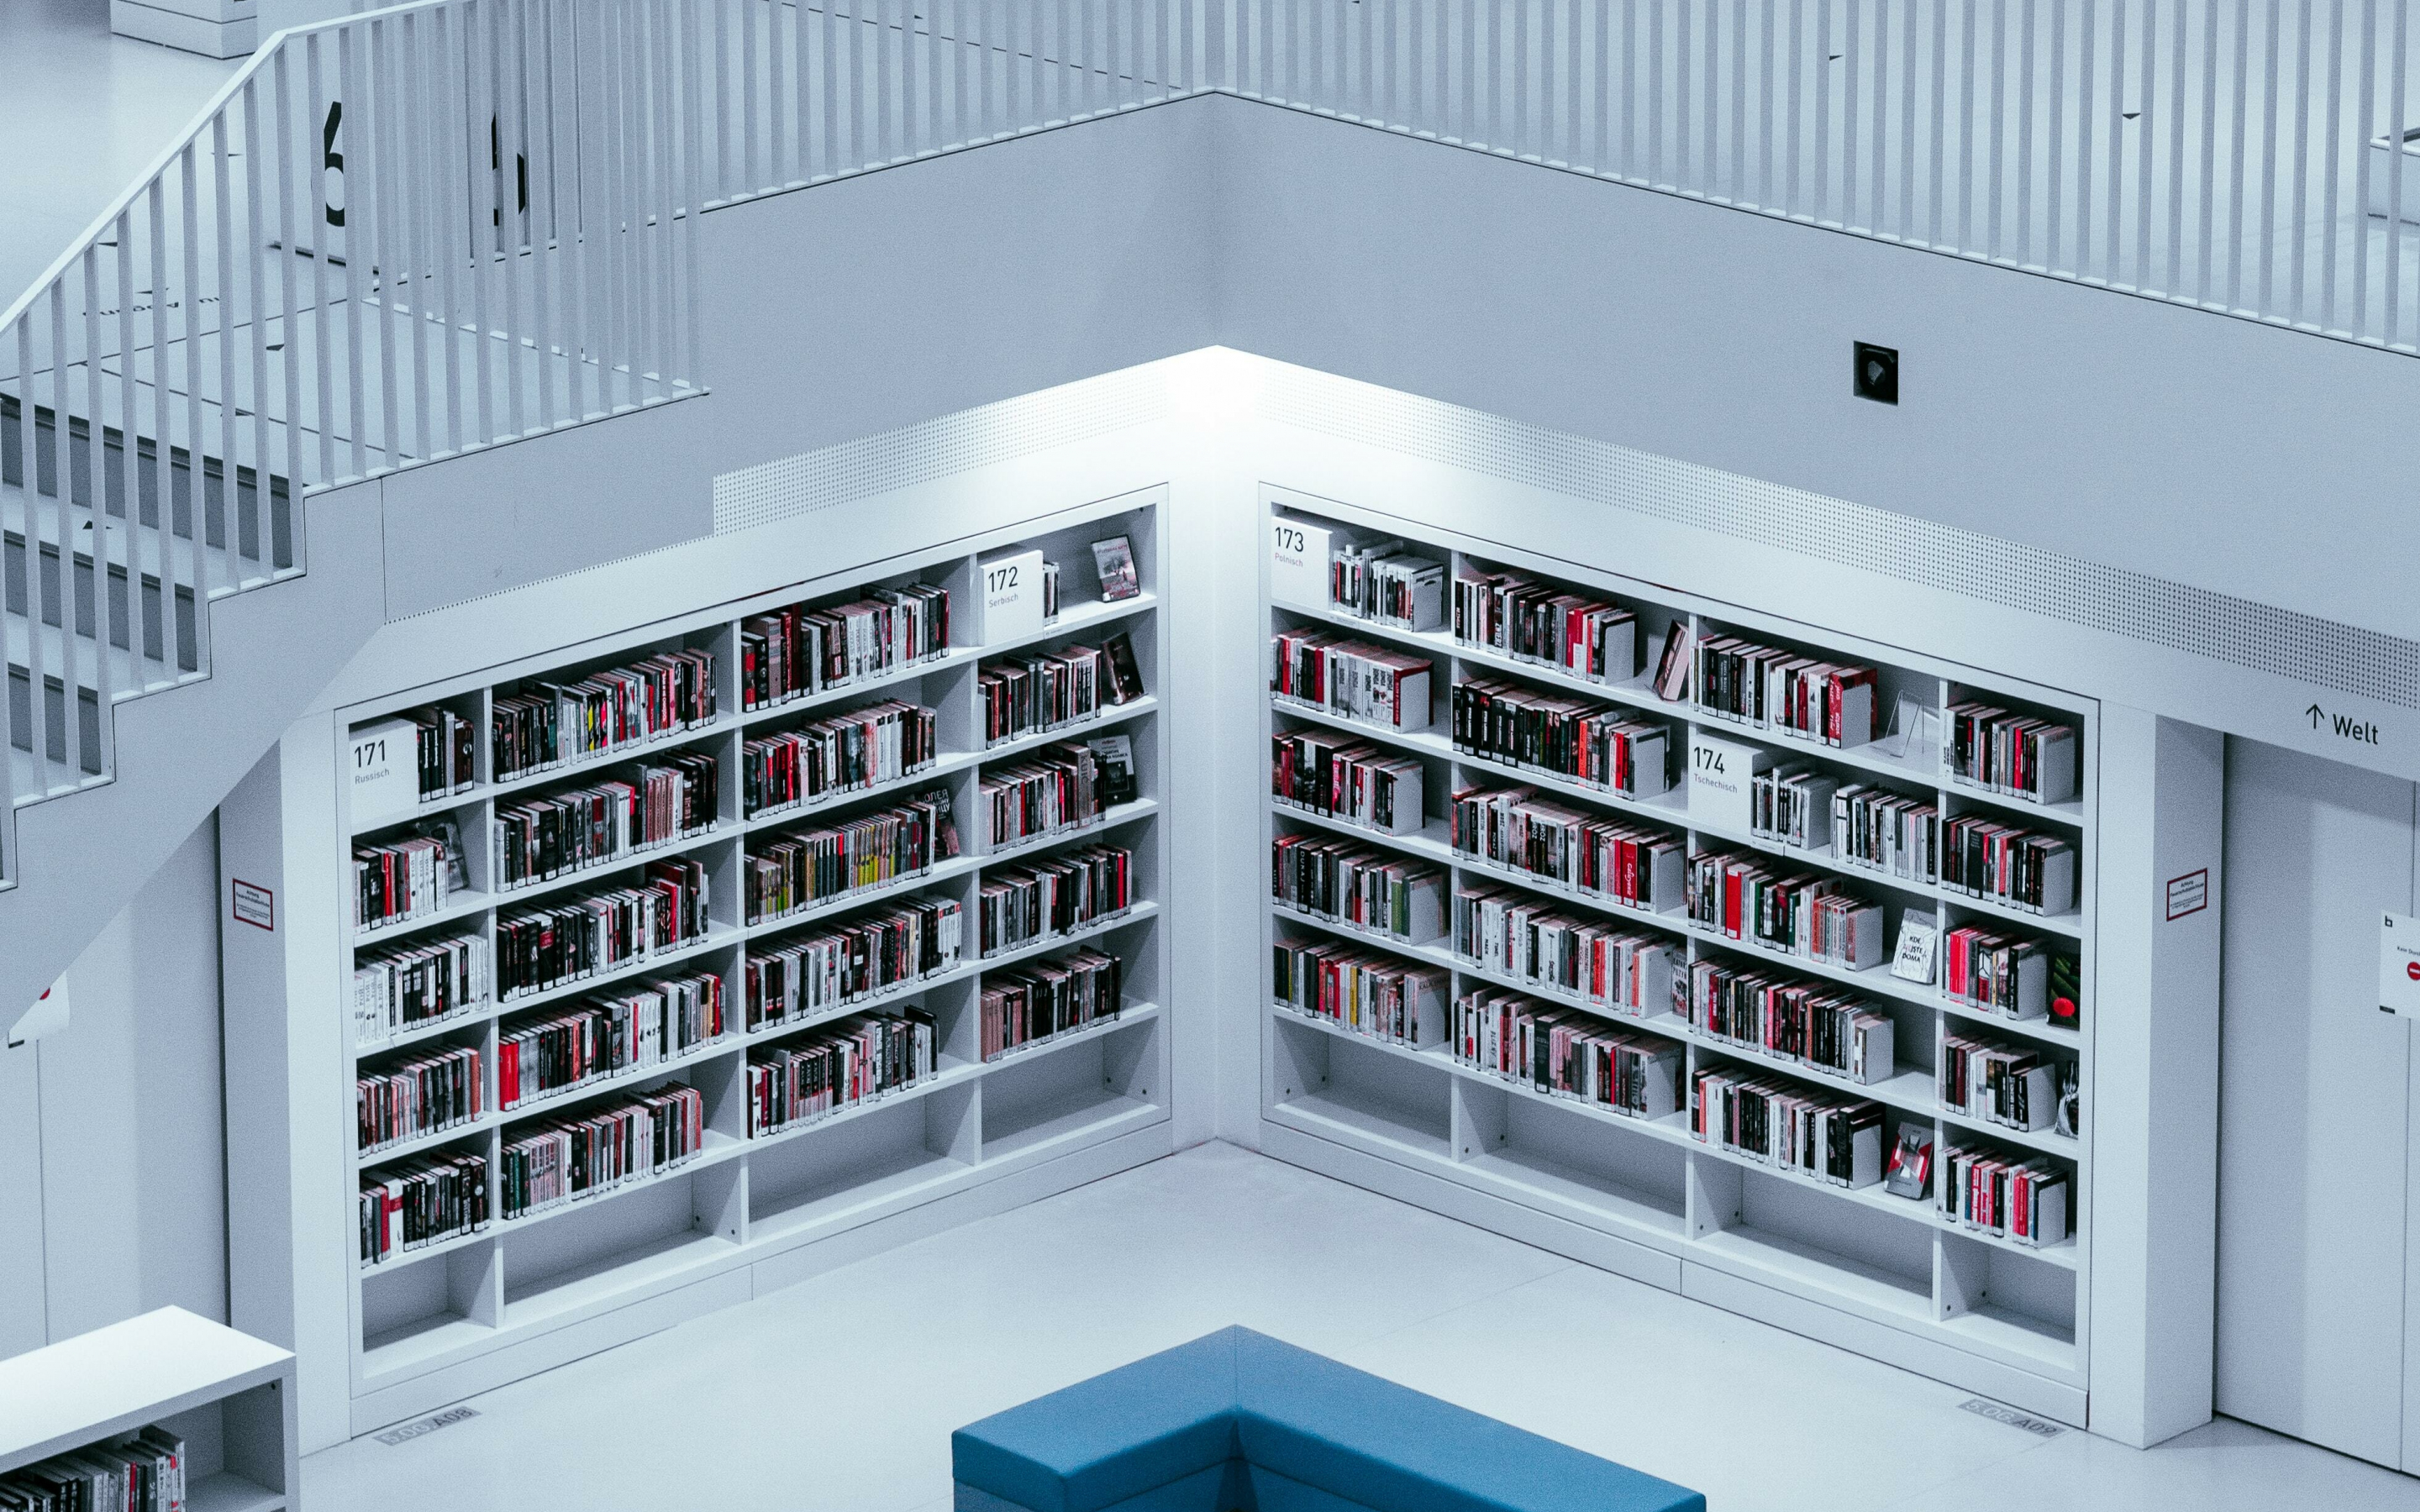 Stadtbibliothek, library, building, interior, 2880x1800 wallpaper